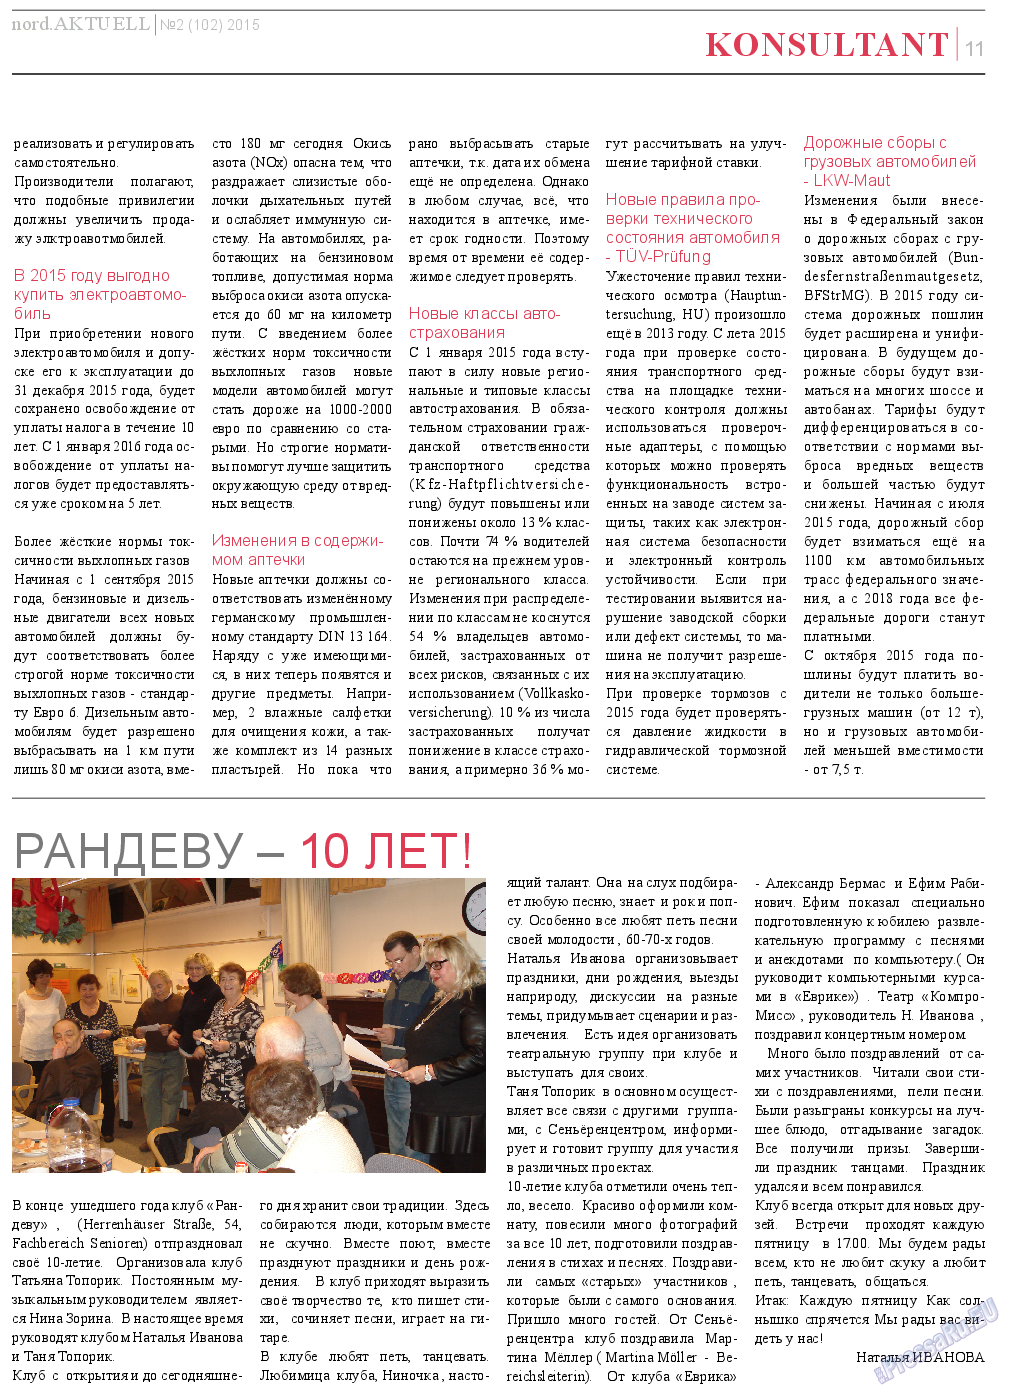 nord.Aktuell, газета. 2015 №2 стр.11